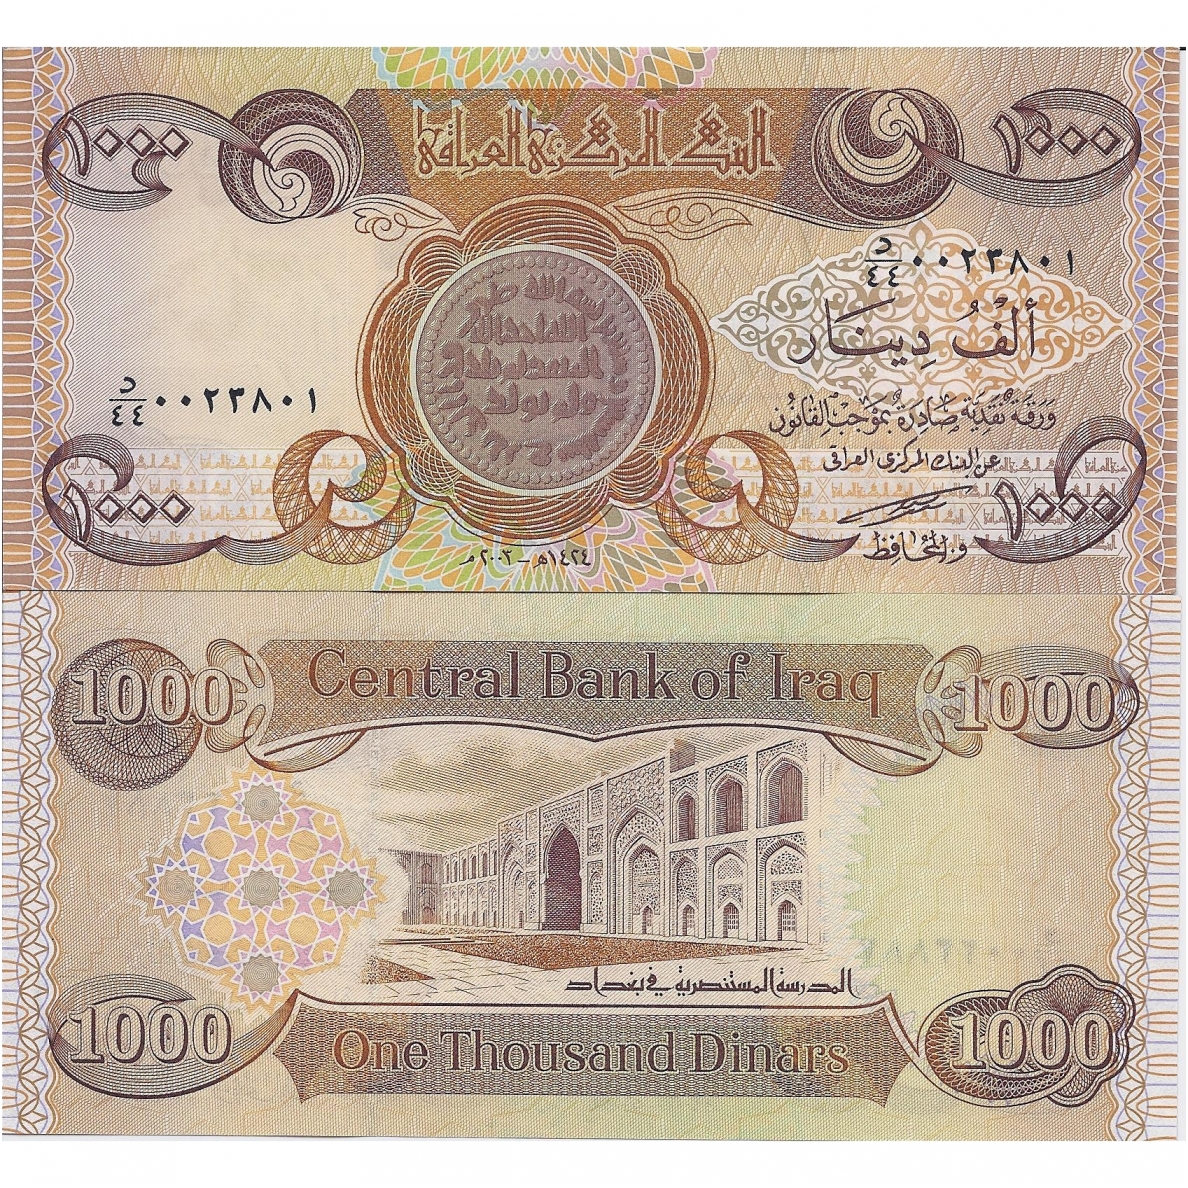 Iraq 1000 Dinars 2003 P 93a Unc Banknotai Www Coins Lt